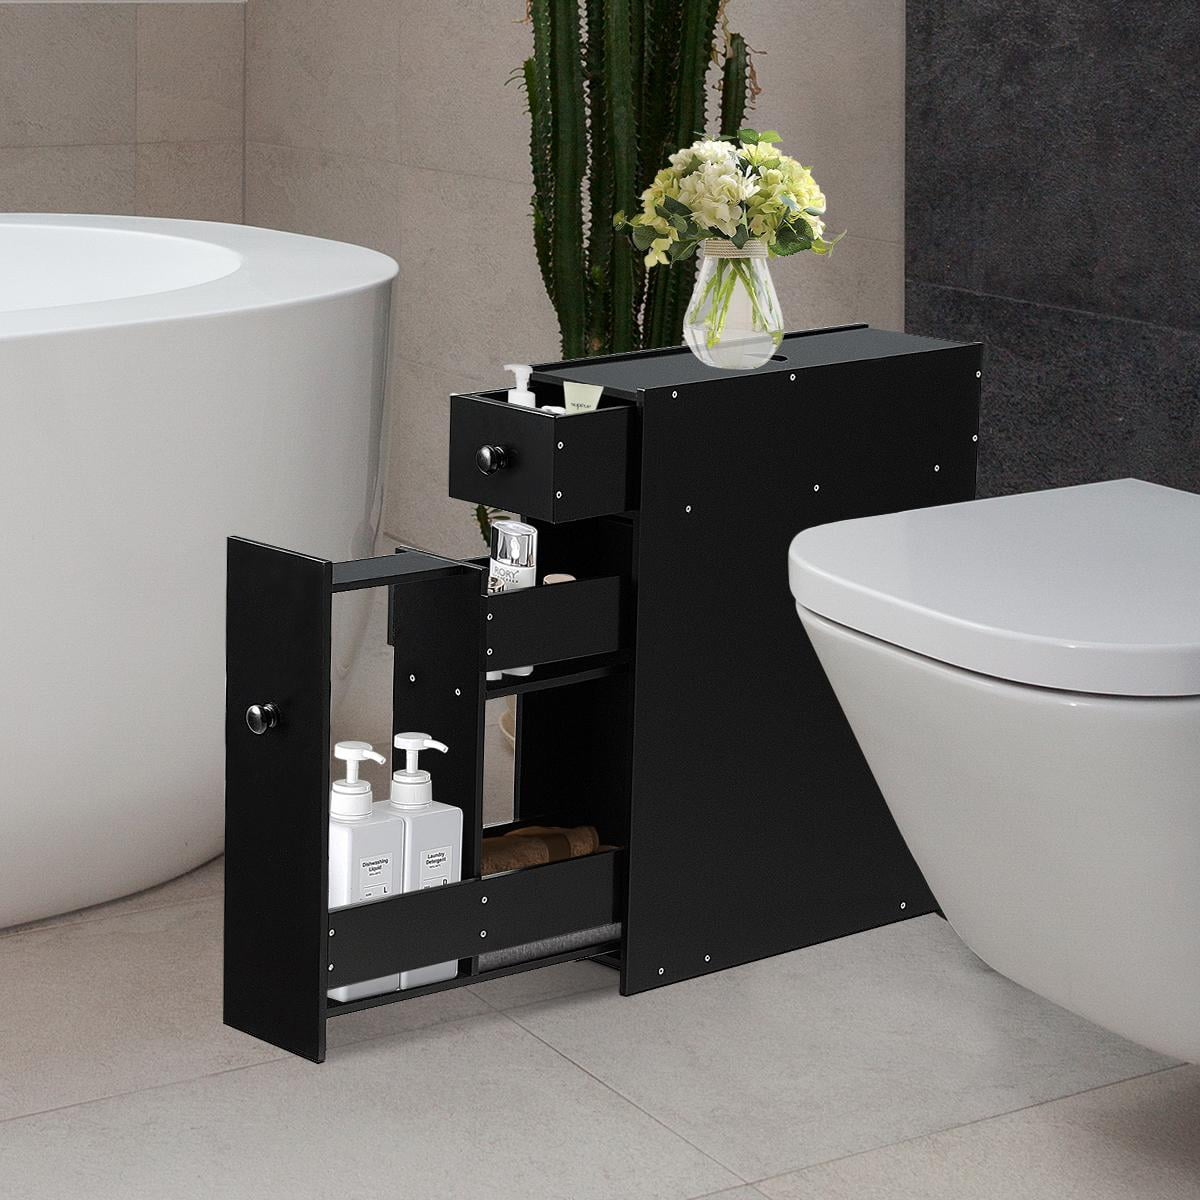 Giantex Small Bathroom Storage Cabinet - Slim Bathroom Organizer with Wheels, 2 Drawers, 2 Baskets